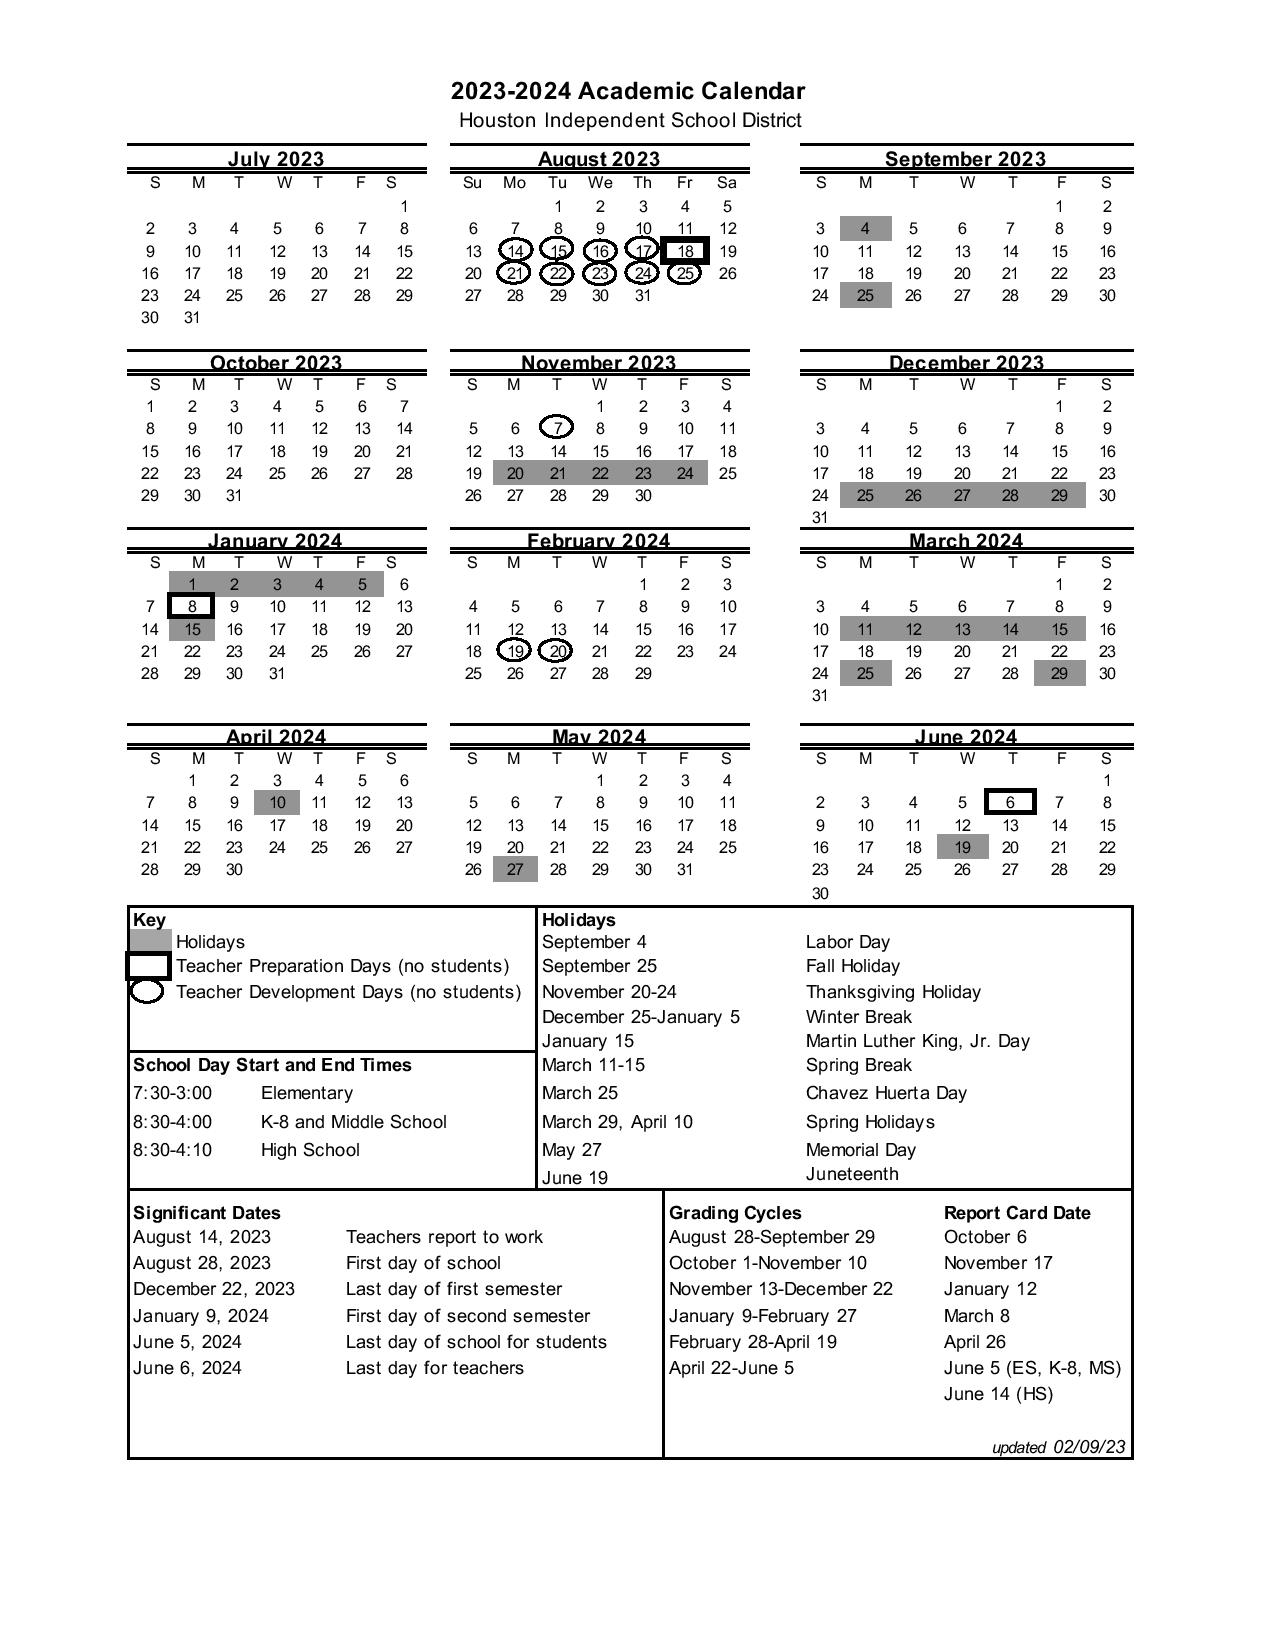 Houston Independent School District Calendar Page 001 